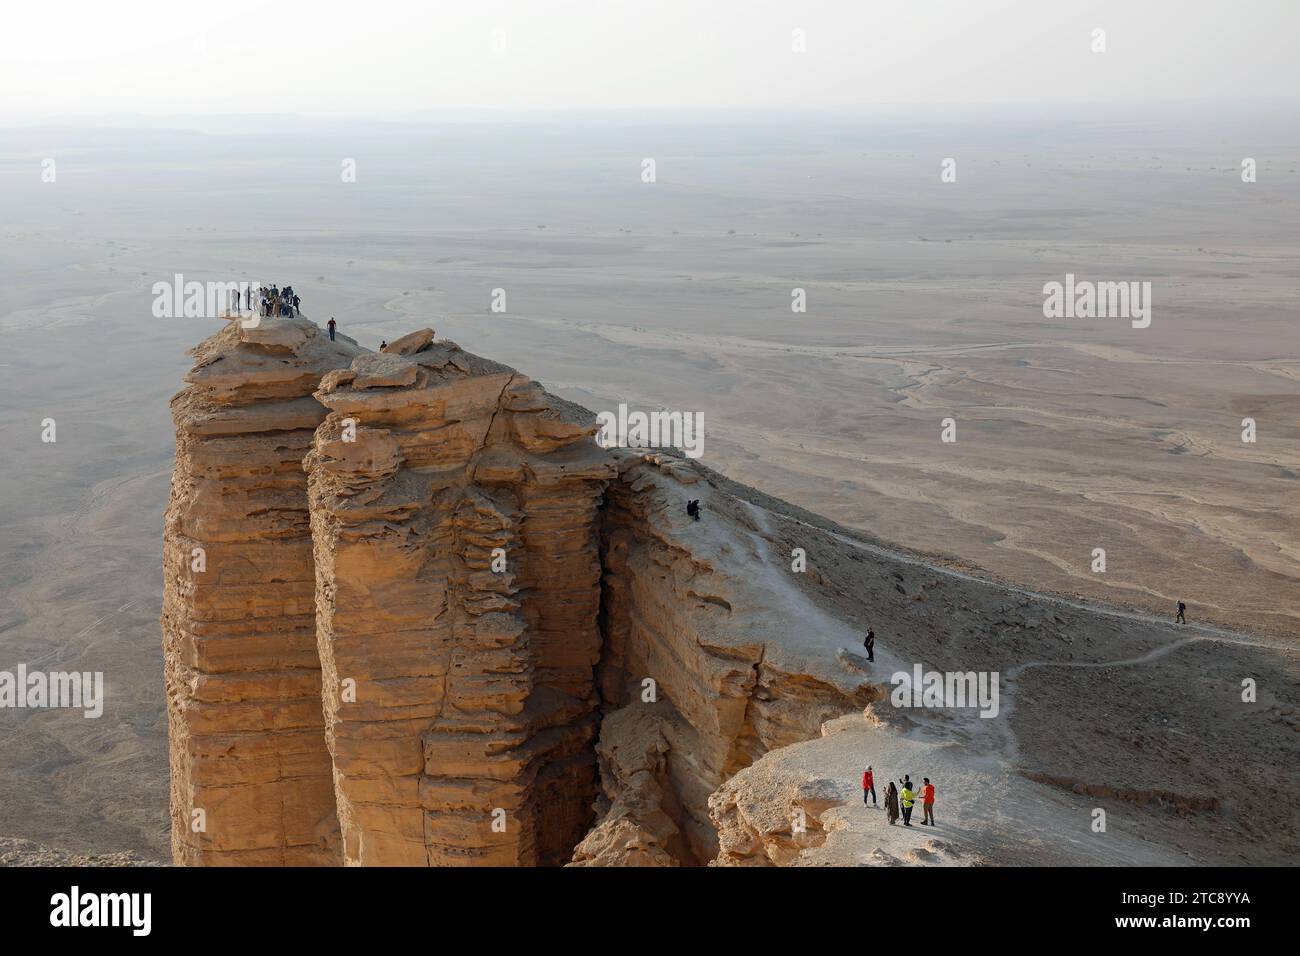 Tourists at the Edge of the World in Saudi Arabia Stock Photo